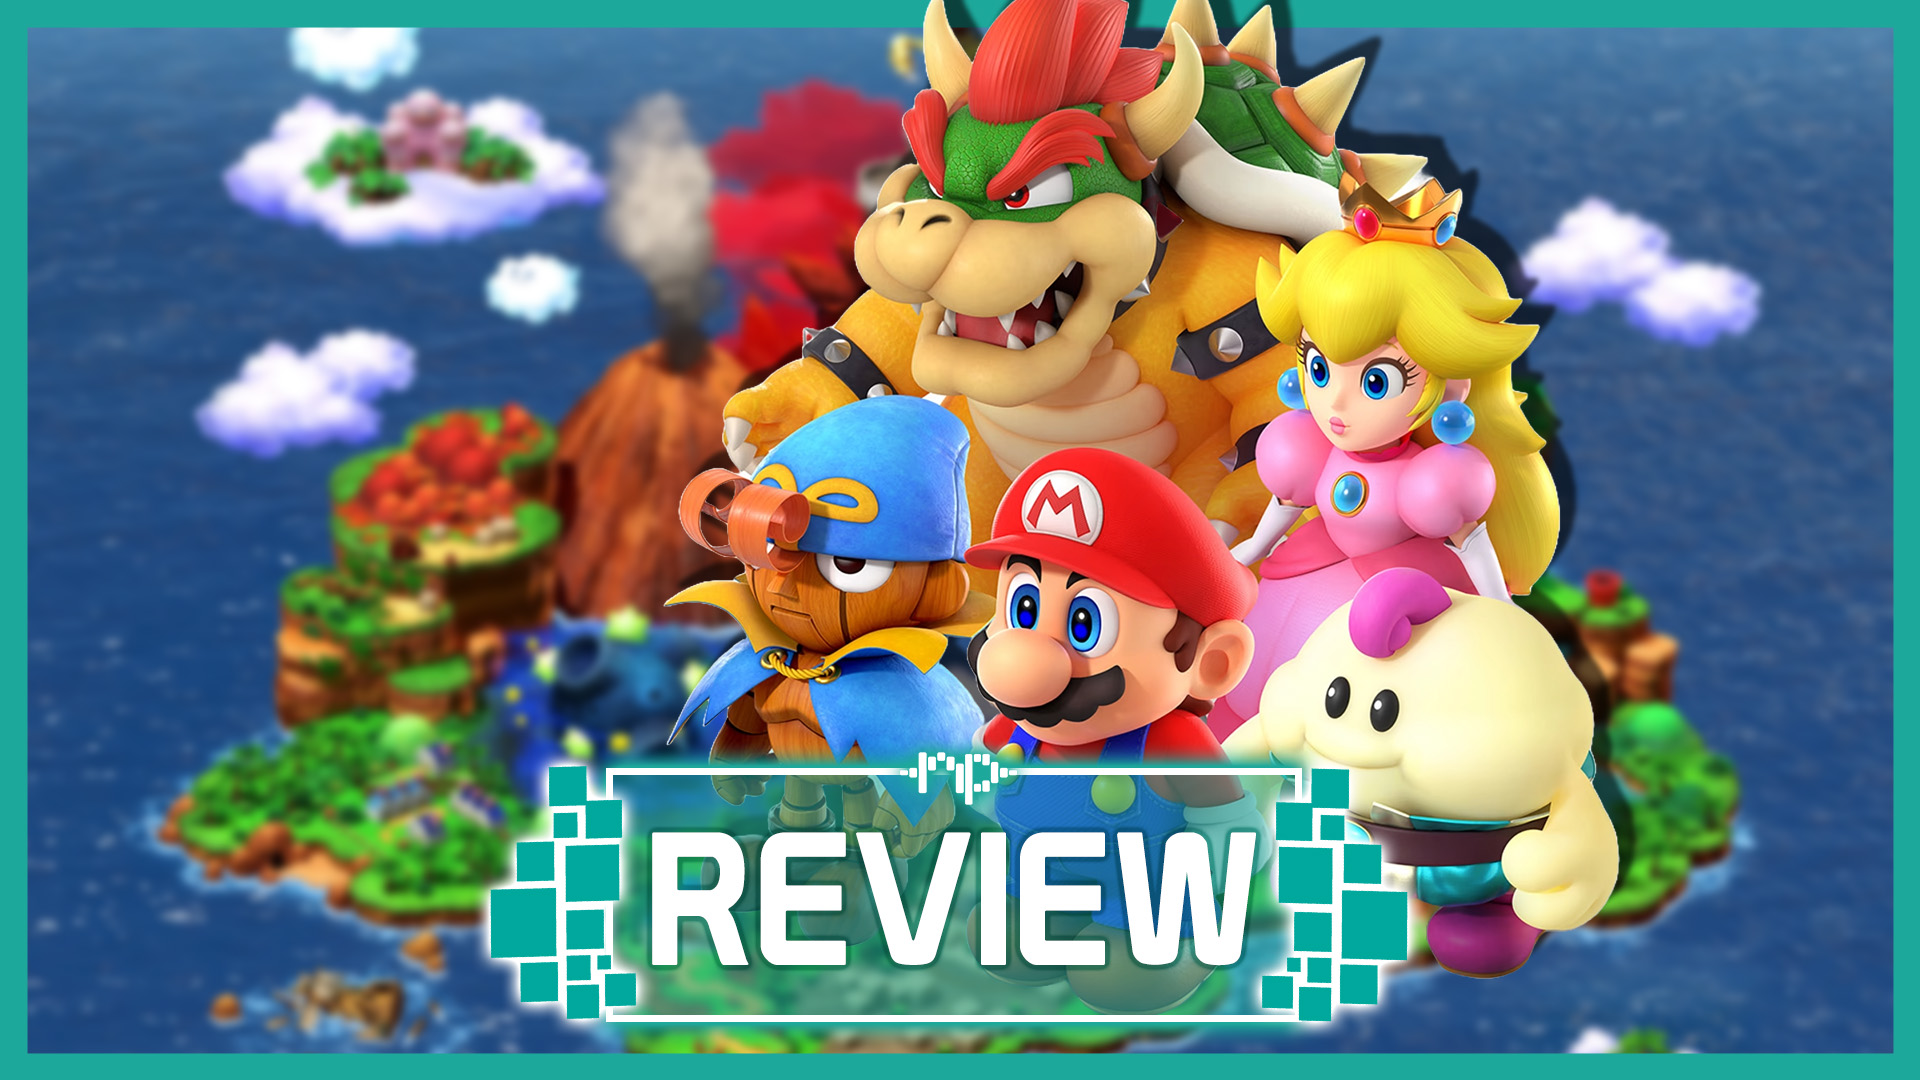 Super Mario RPG Remake Review – A Nostalgic Masterpiece